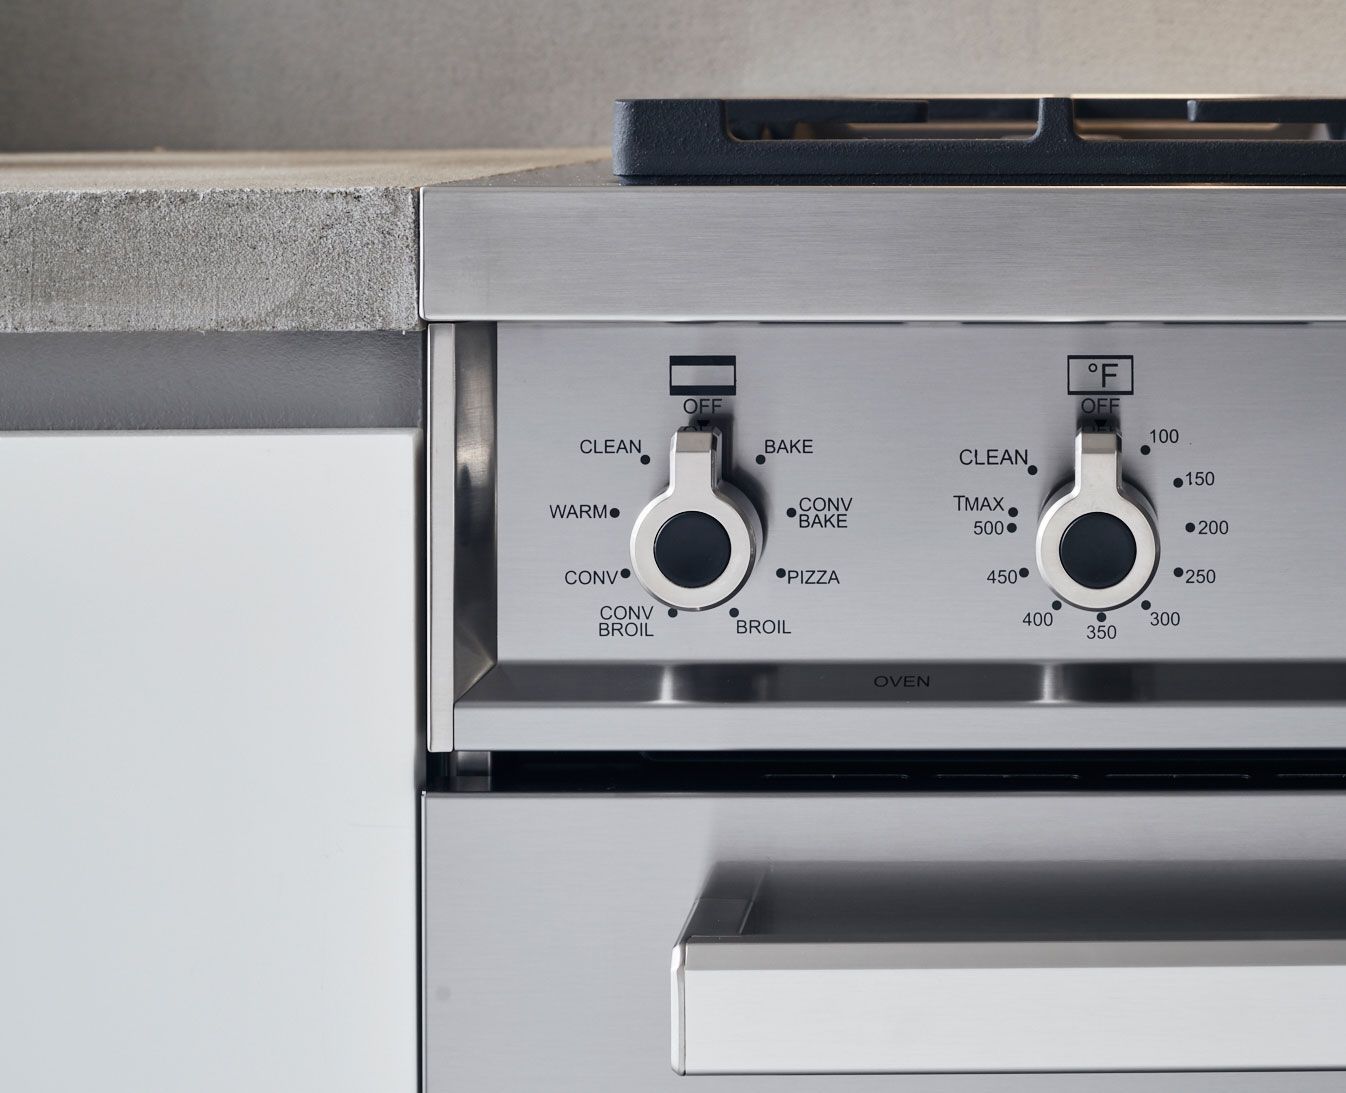 Bertazzoni | 48" Professional Series range - Electric self clean oven - 6 brass burners + griddle | PROF486GDFSXT